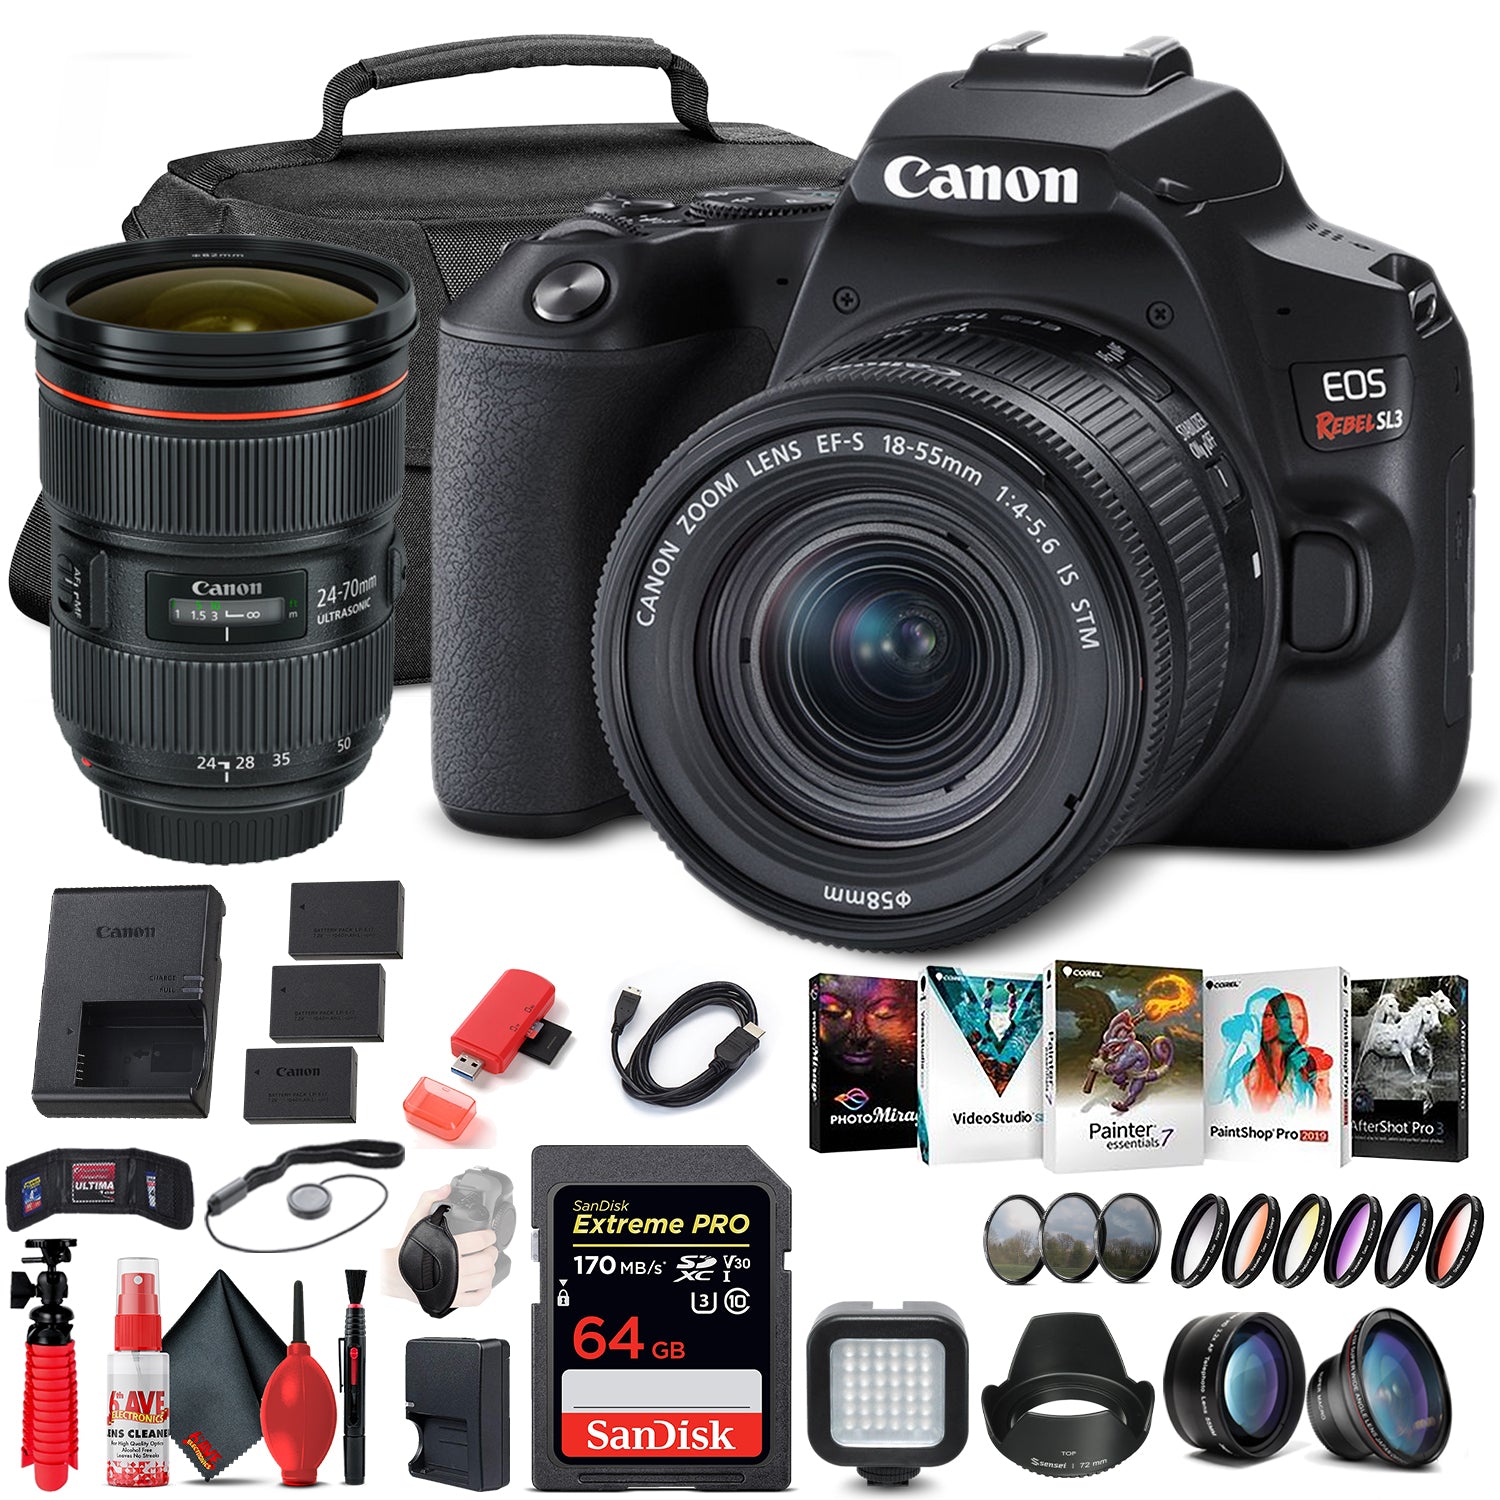 Canon EOS Rebel SL3 DSLR Camera with 18-55mm Lens (Black) (3453C002) Extra Battery Bundle